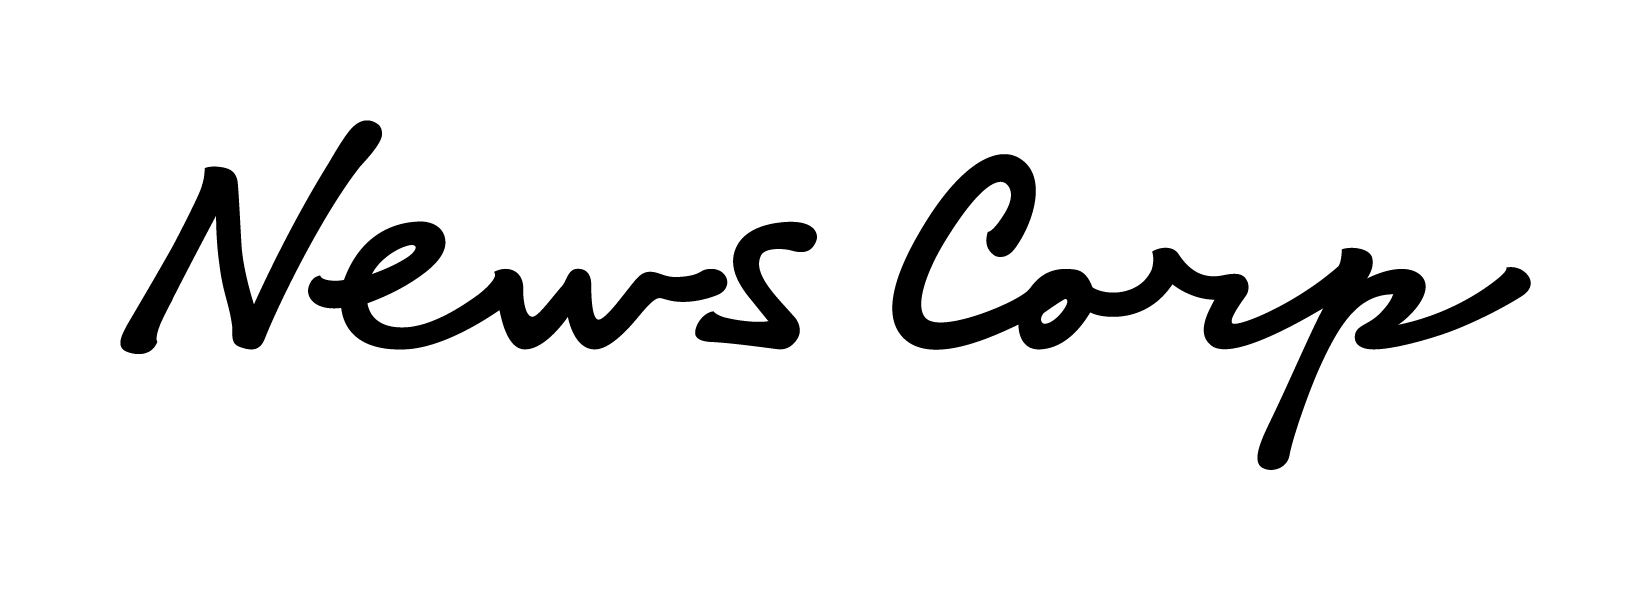 News Corporation (NWS) logo